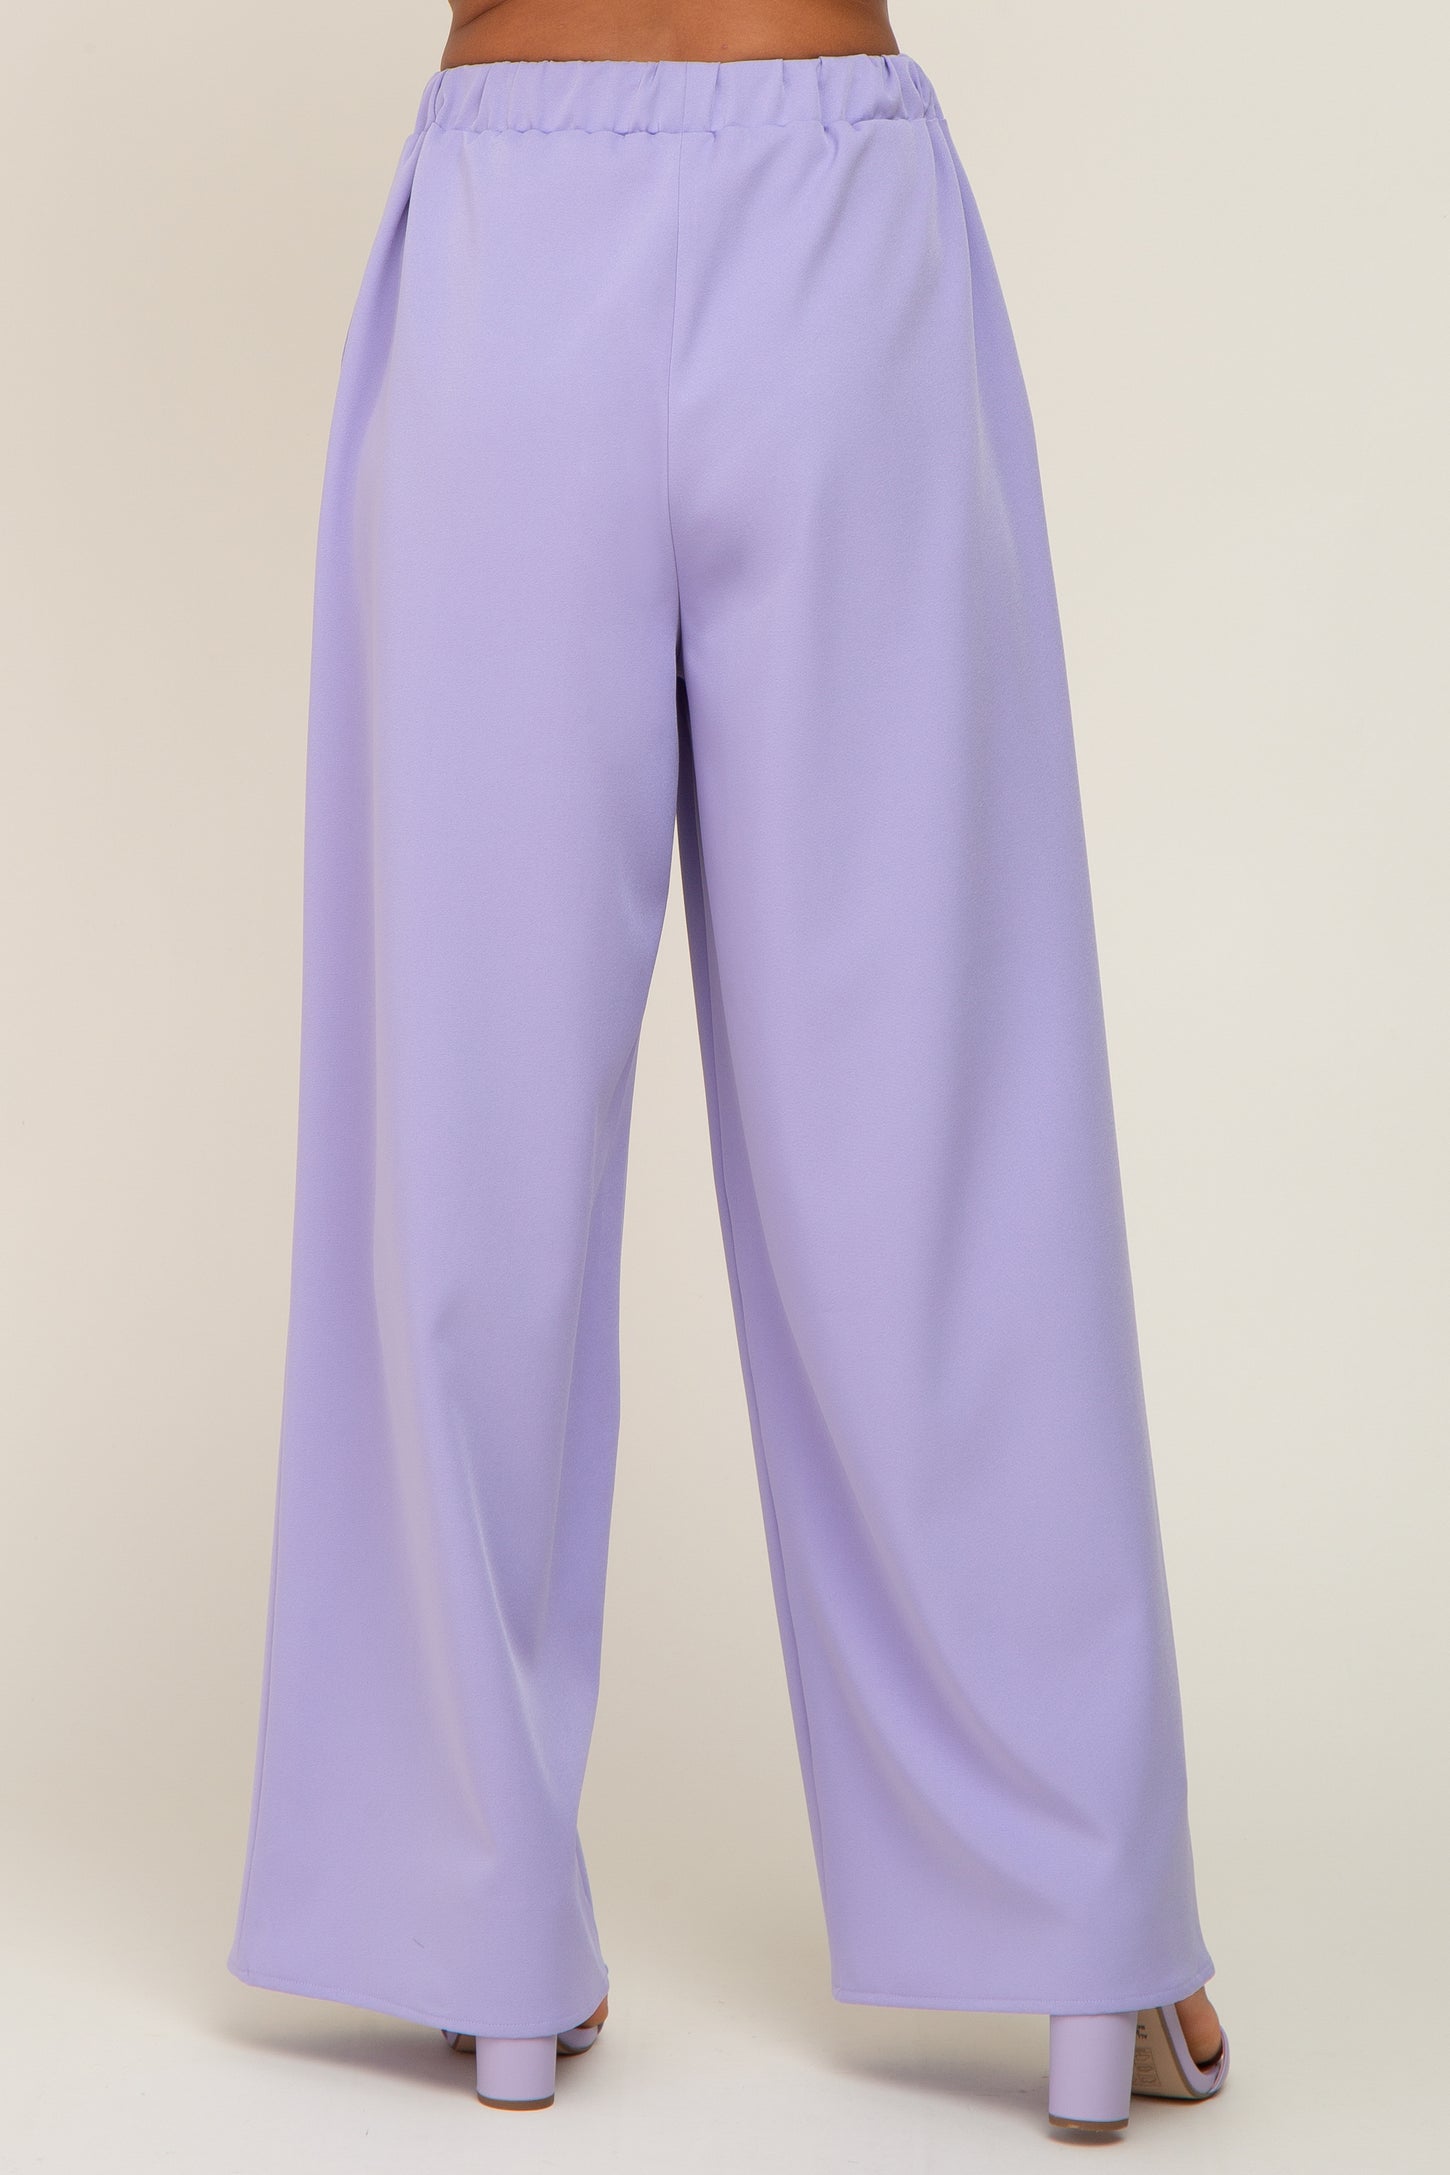 Flowy purple pants -  Portugal